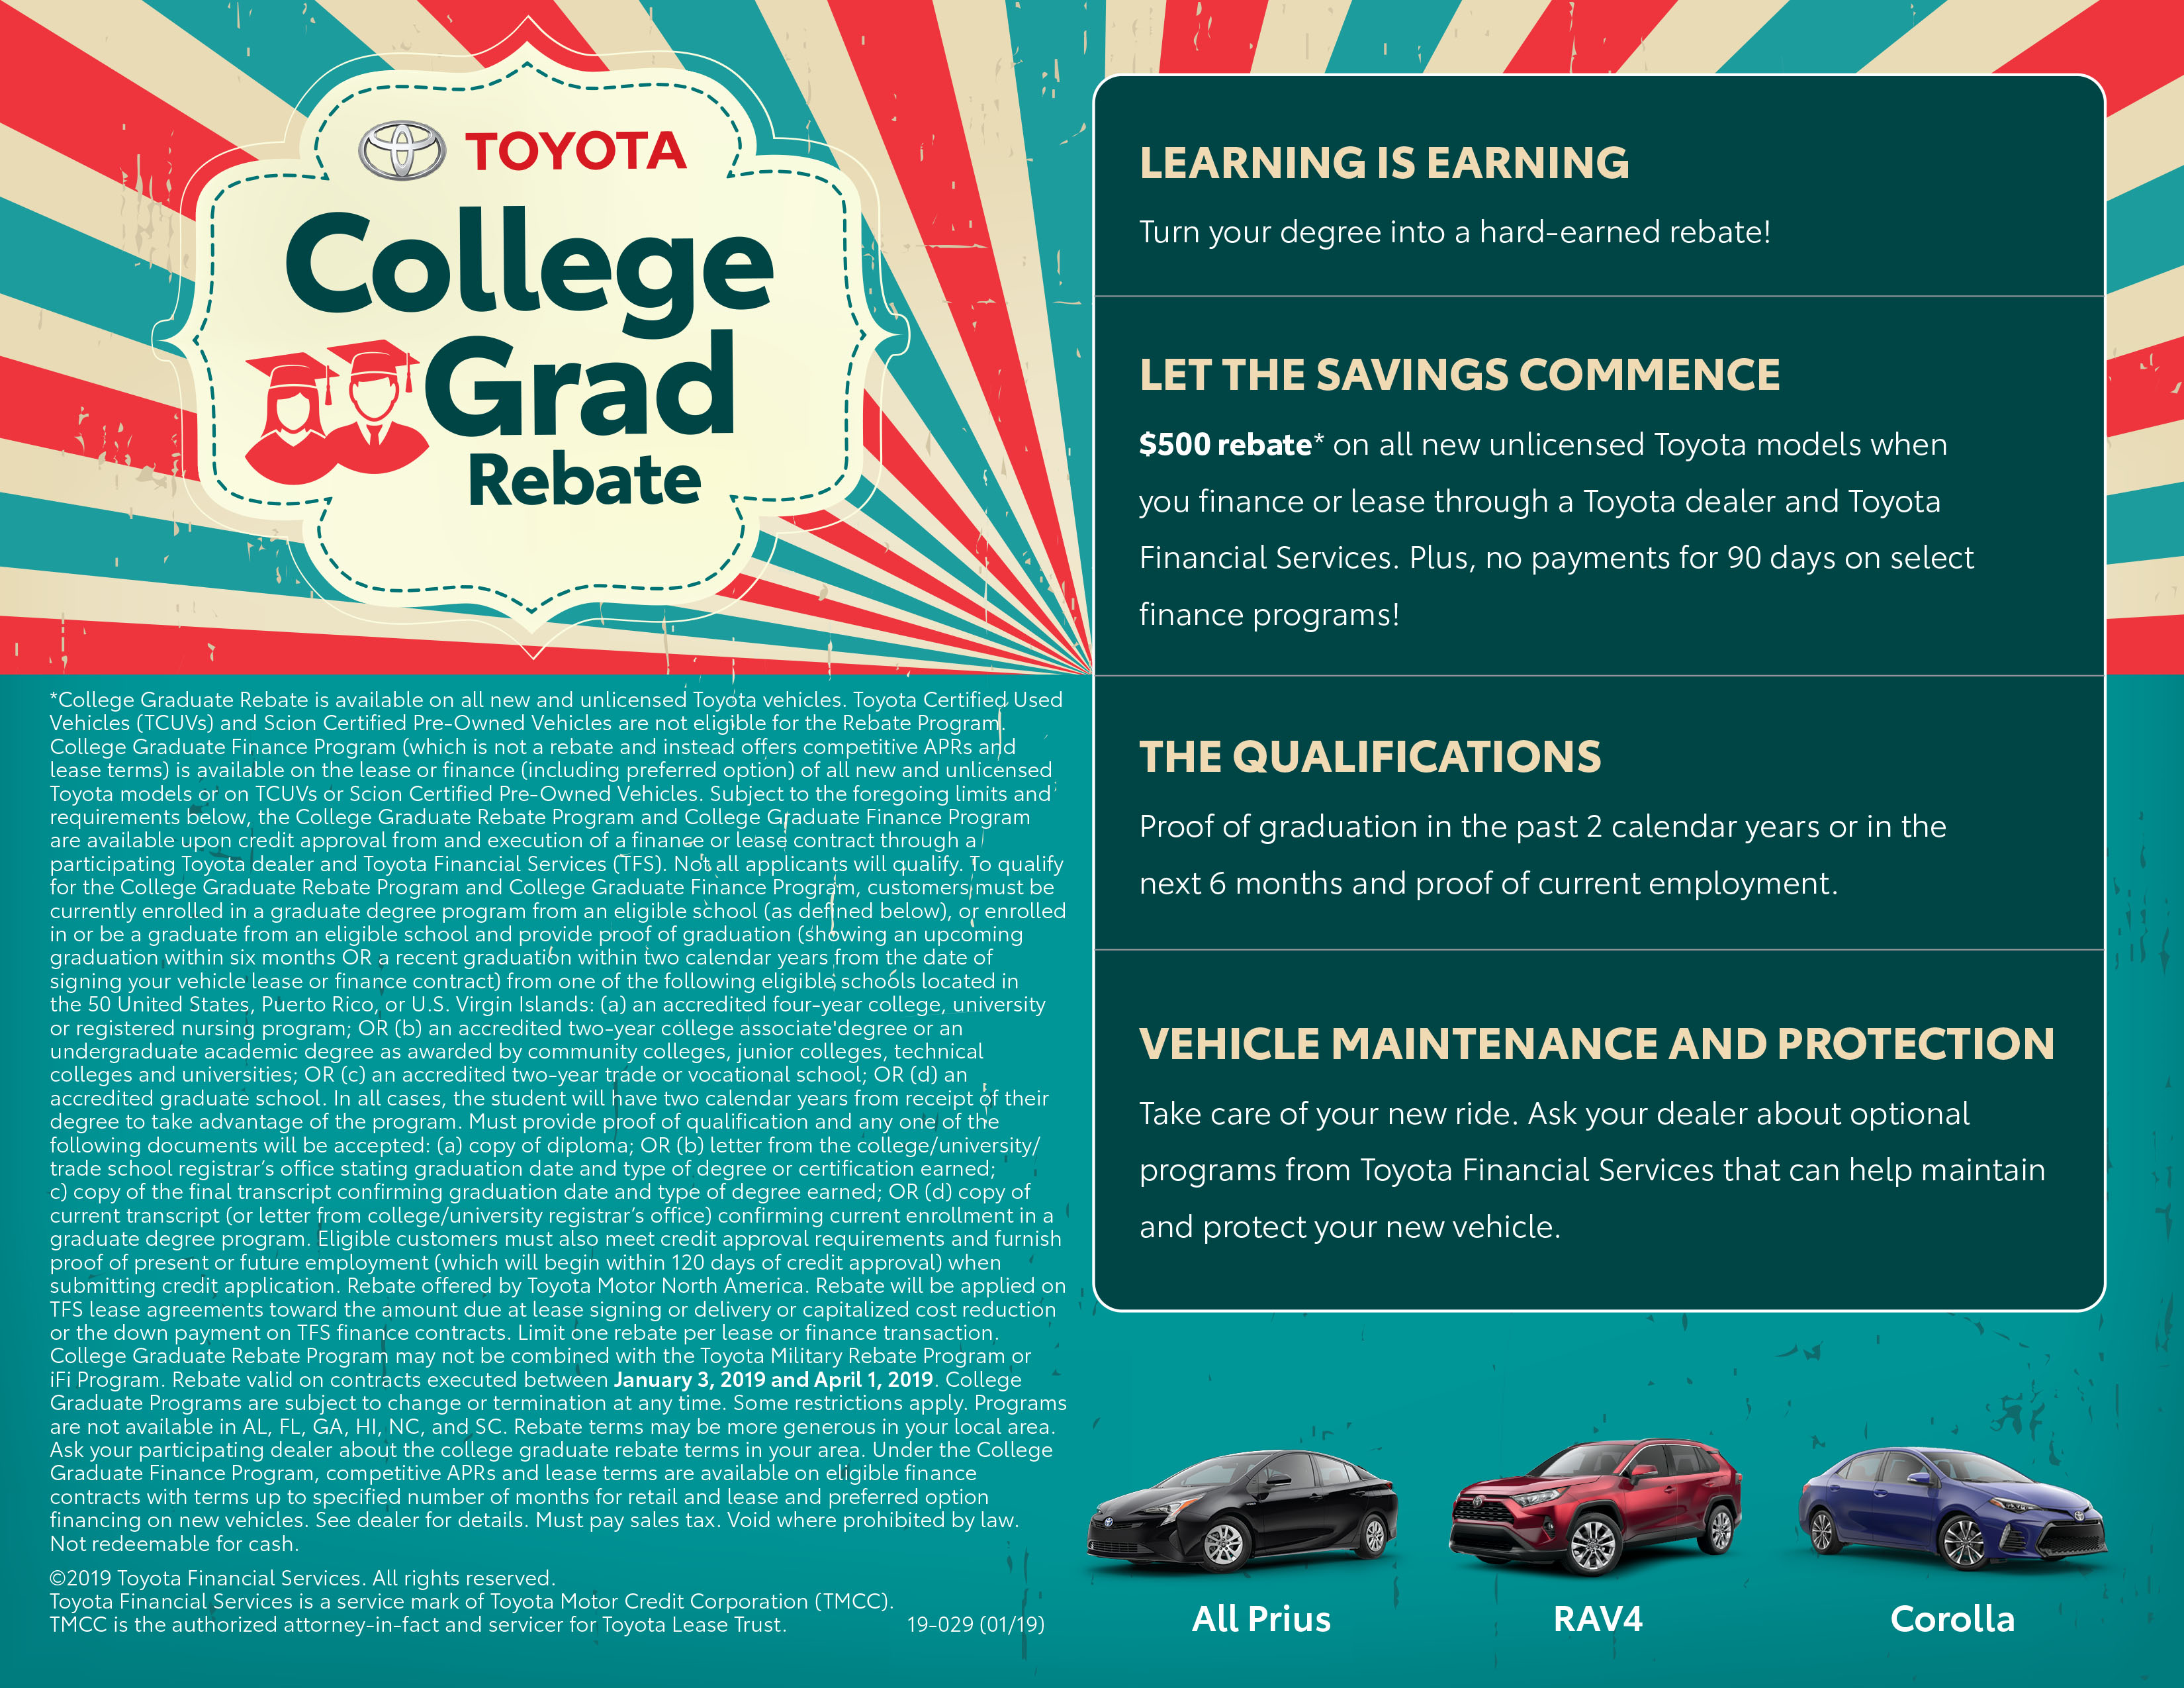 Toyota College Graduate Rebate Program